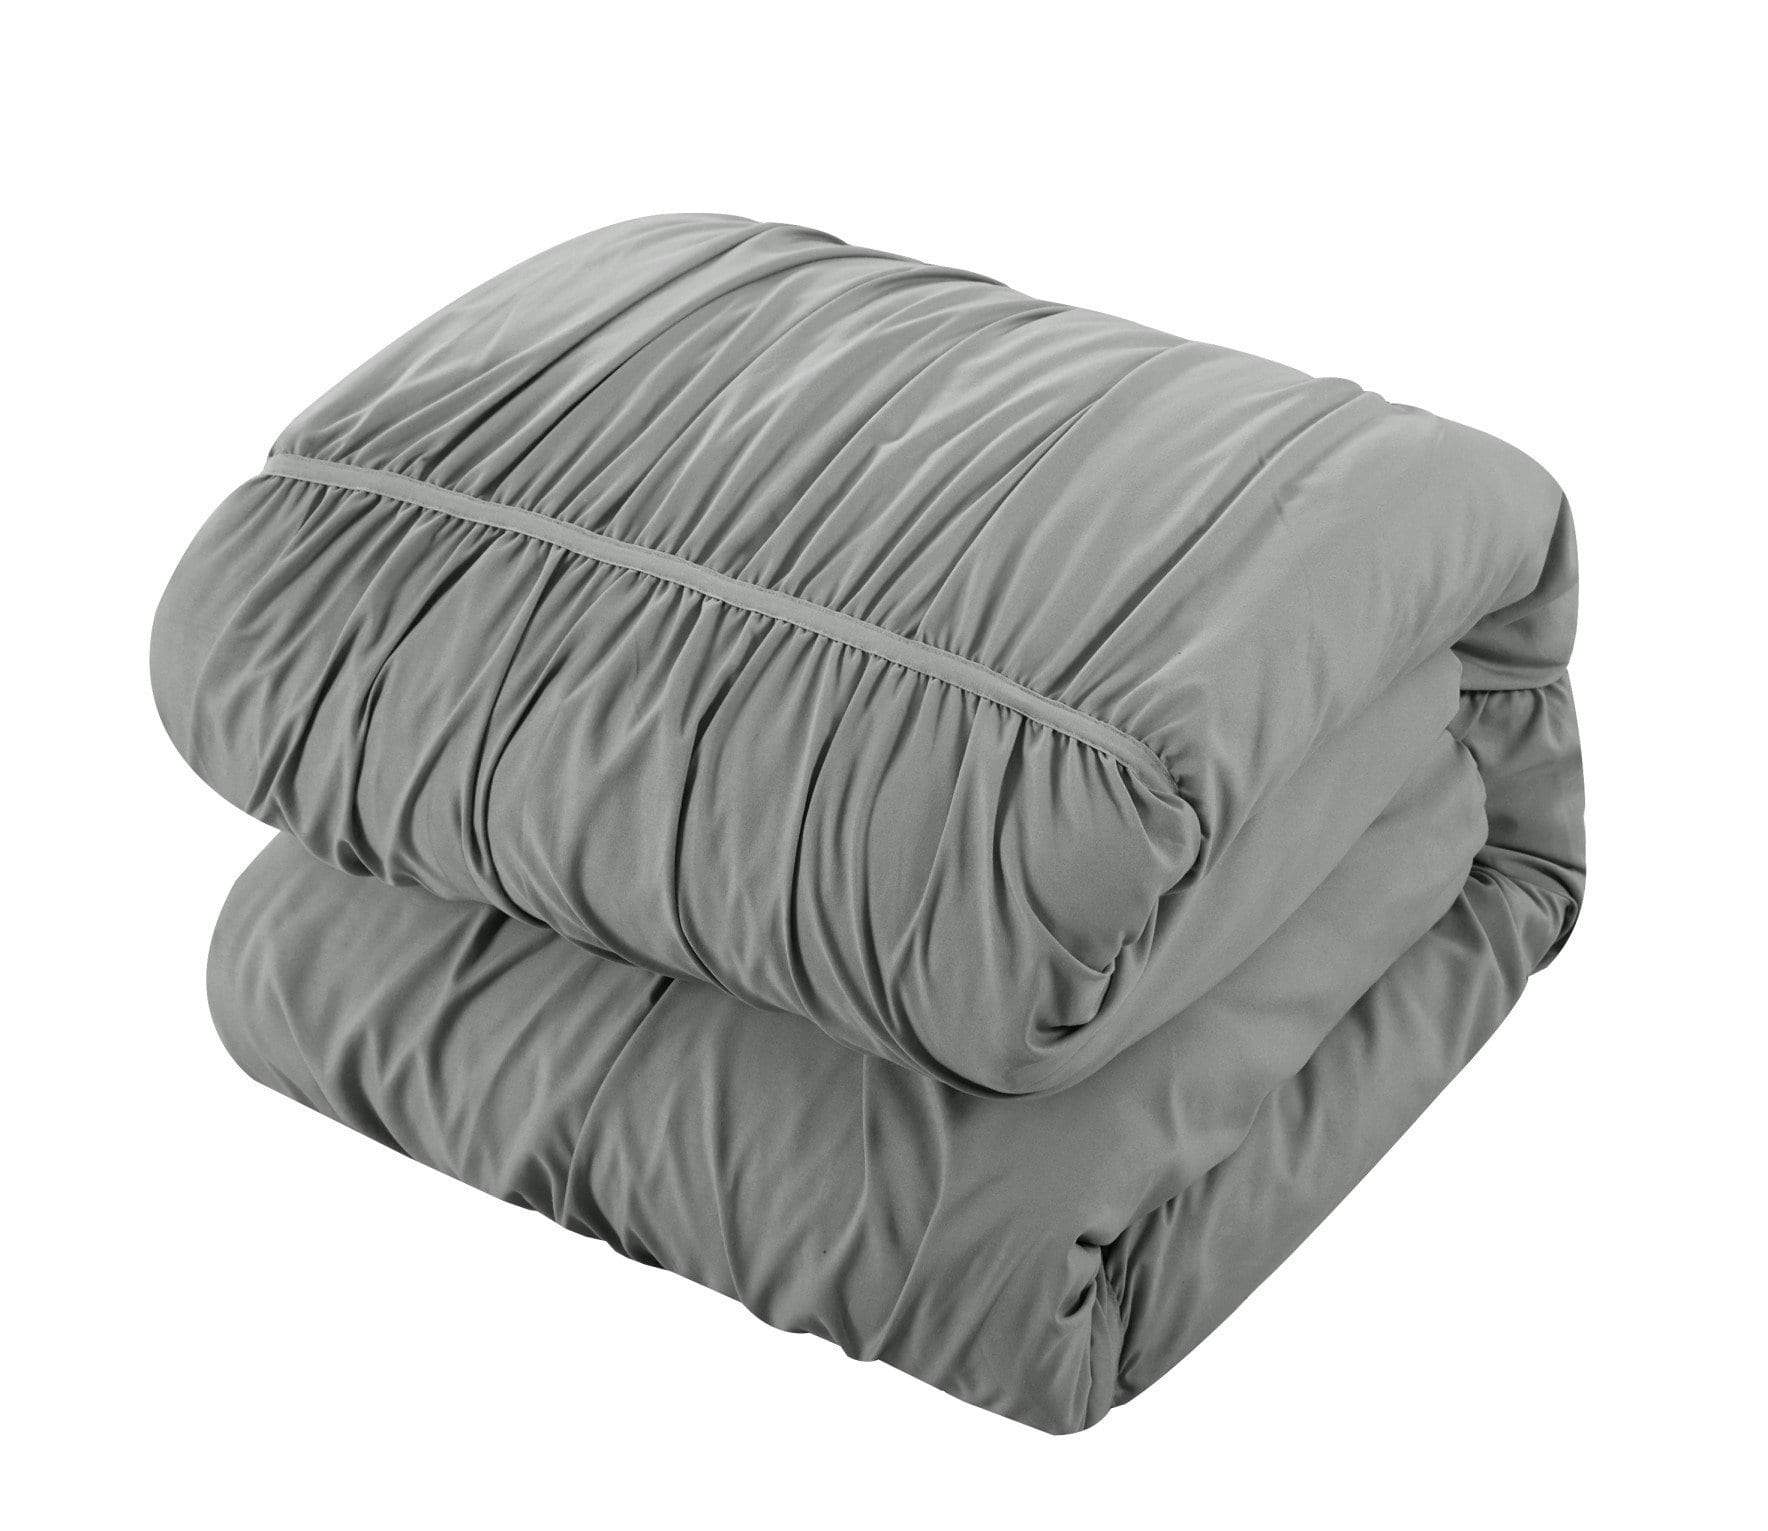 Avila 20 Piece Ruffled Comforter Set